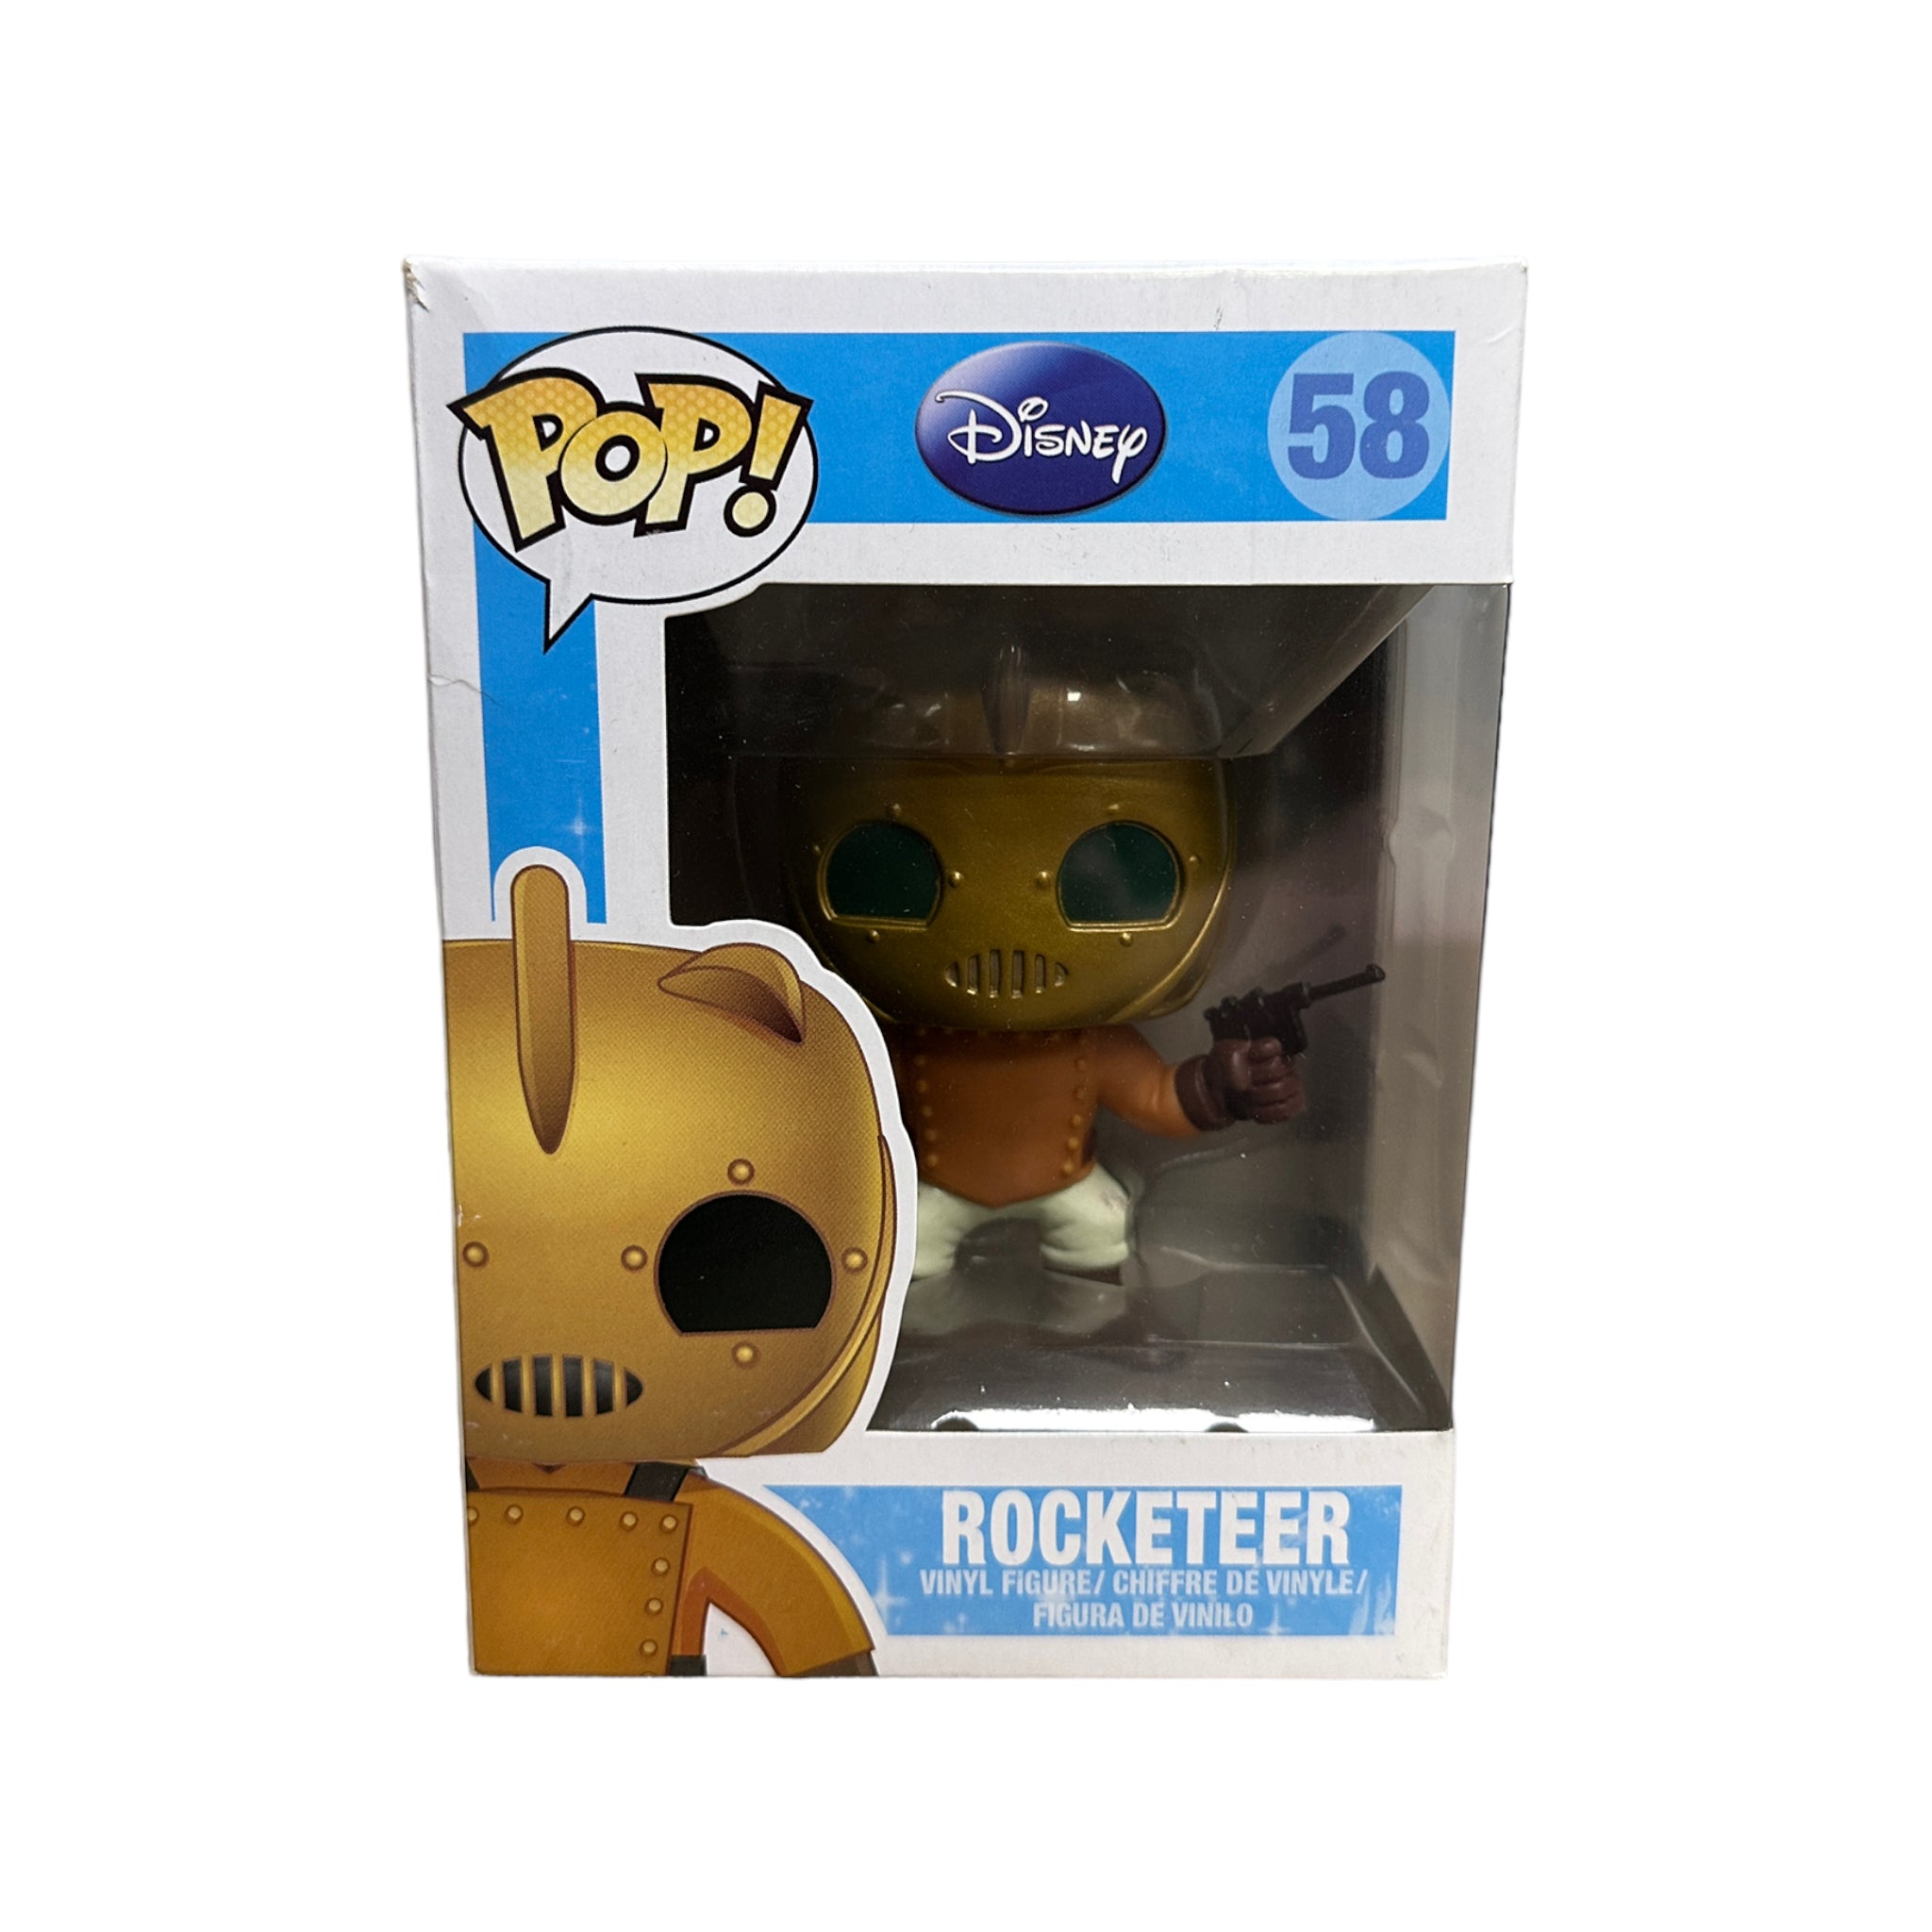 Rocketeer #58 Funko Pop! - Disney Series 5 - 2013 Pop! - Condition 7/10